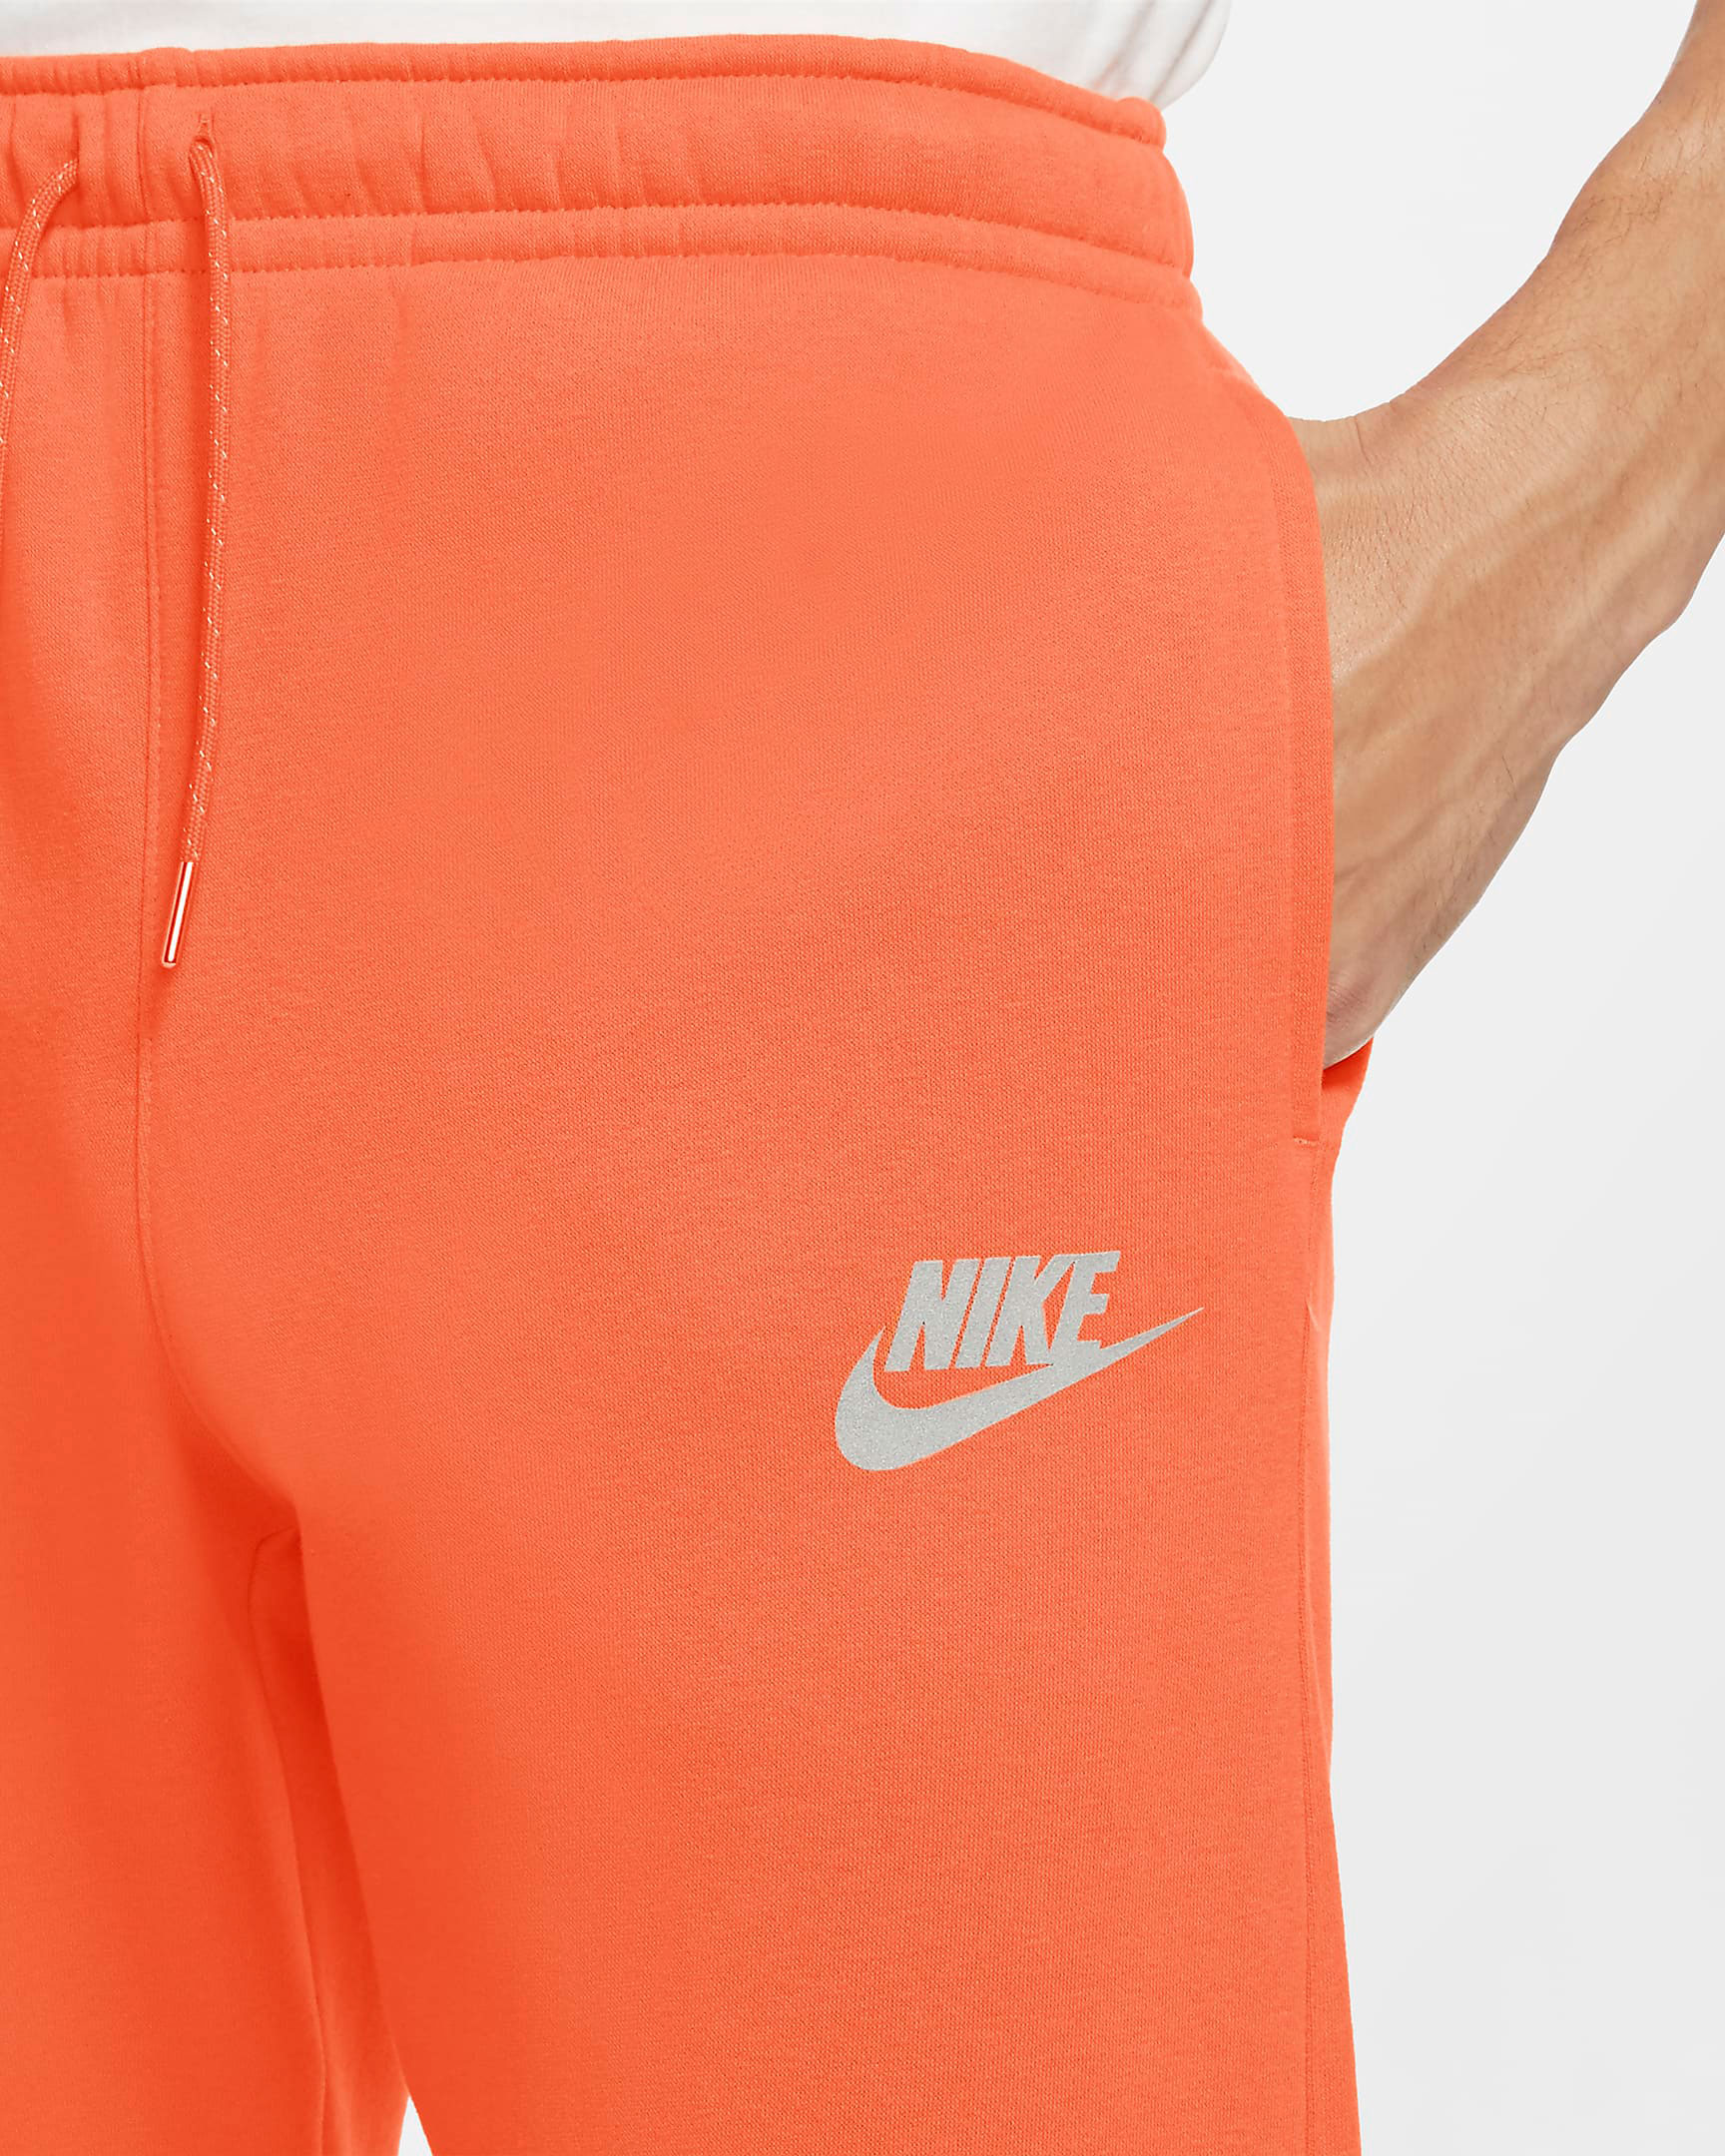 nike-dunk-high-orange-syracuse-joggers-match